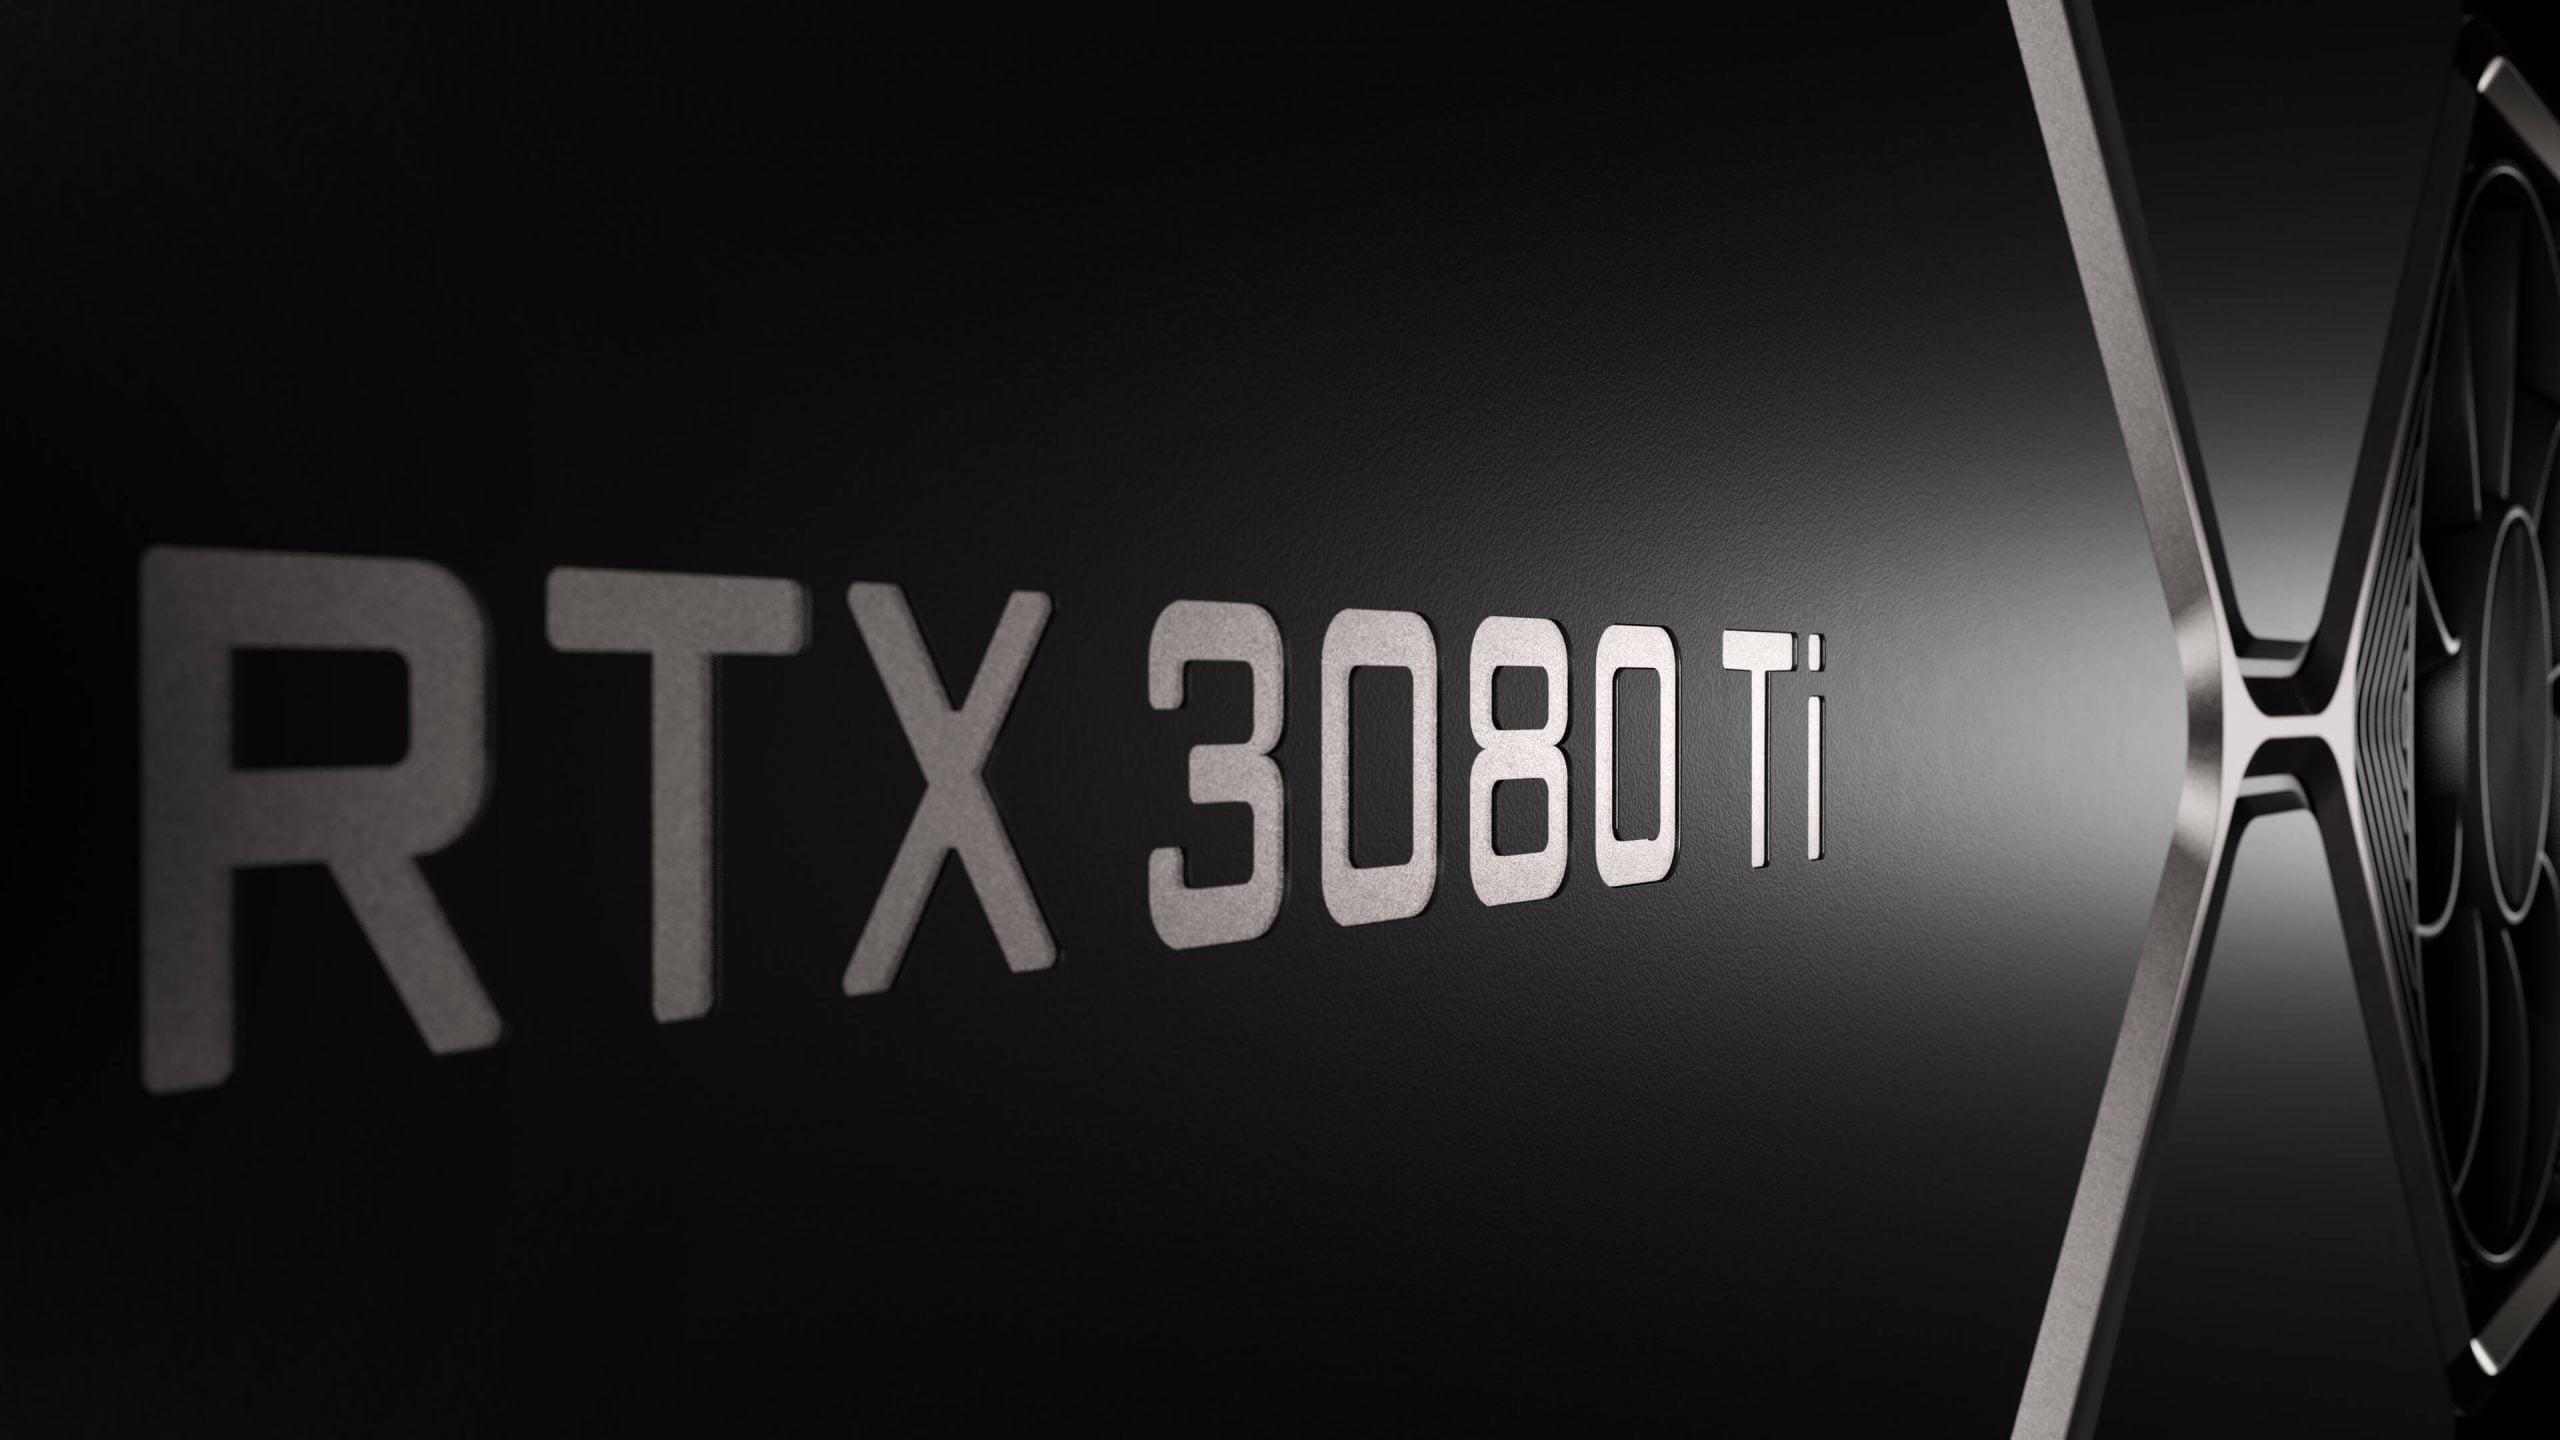 Nvidia Announces Geforce Rtx 3080 Ti And Rtx 3070 Ti At Computex